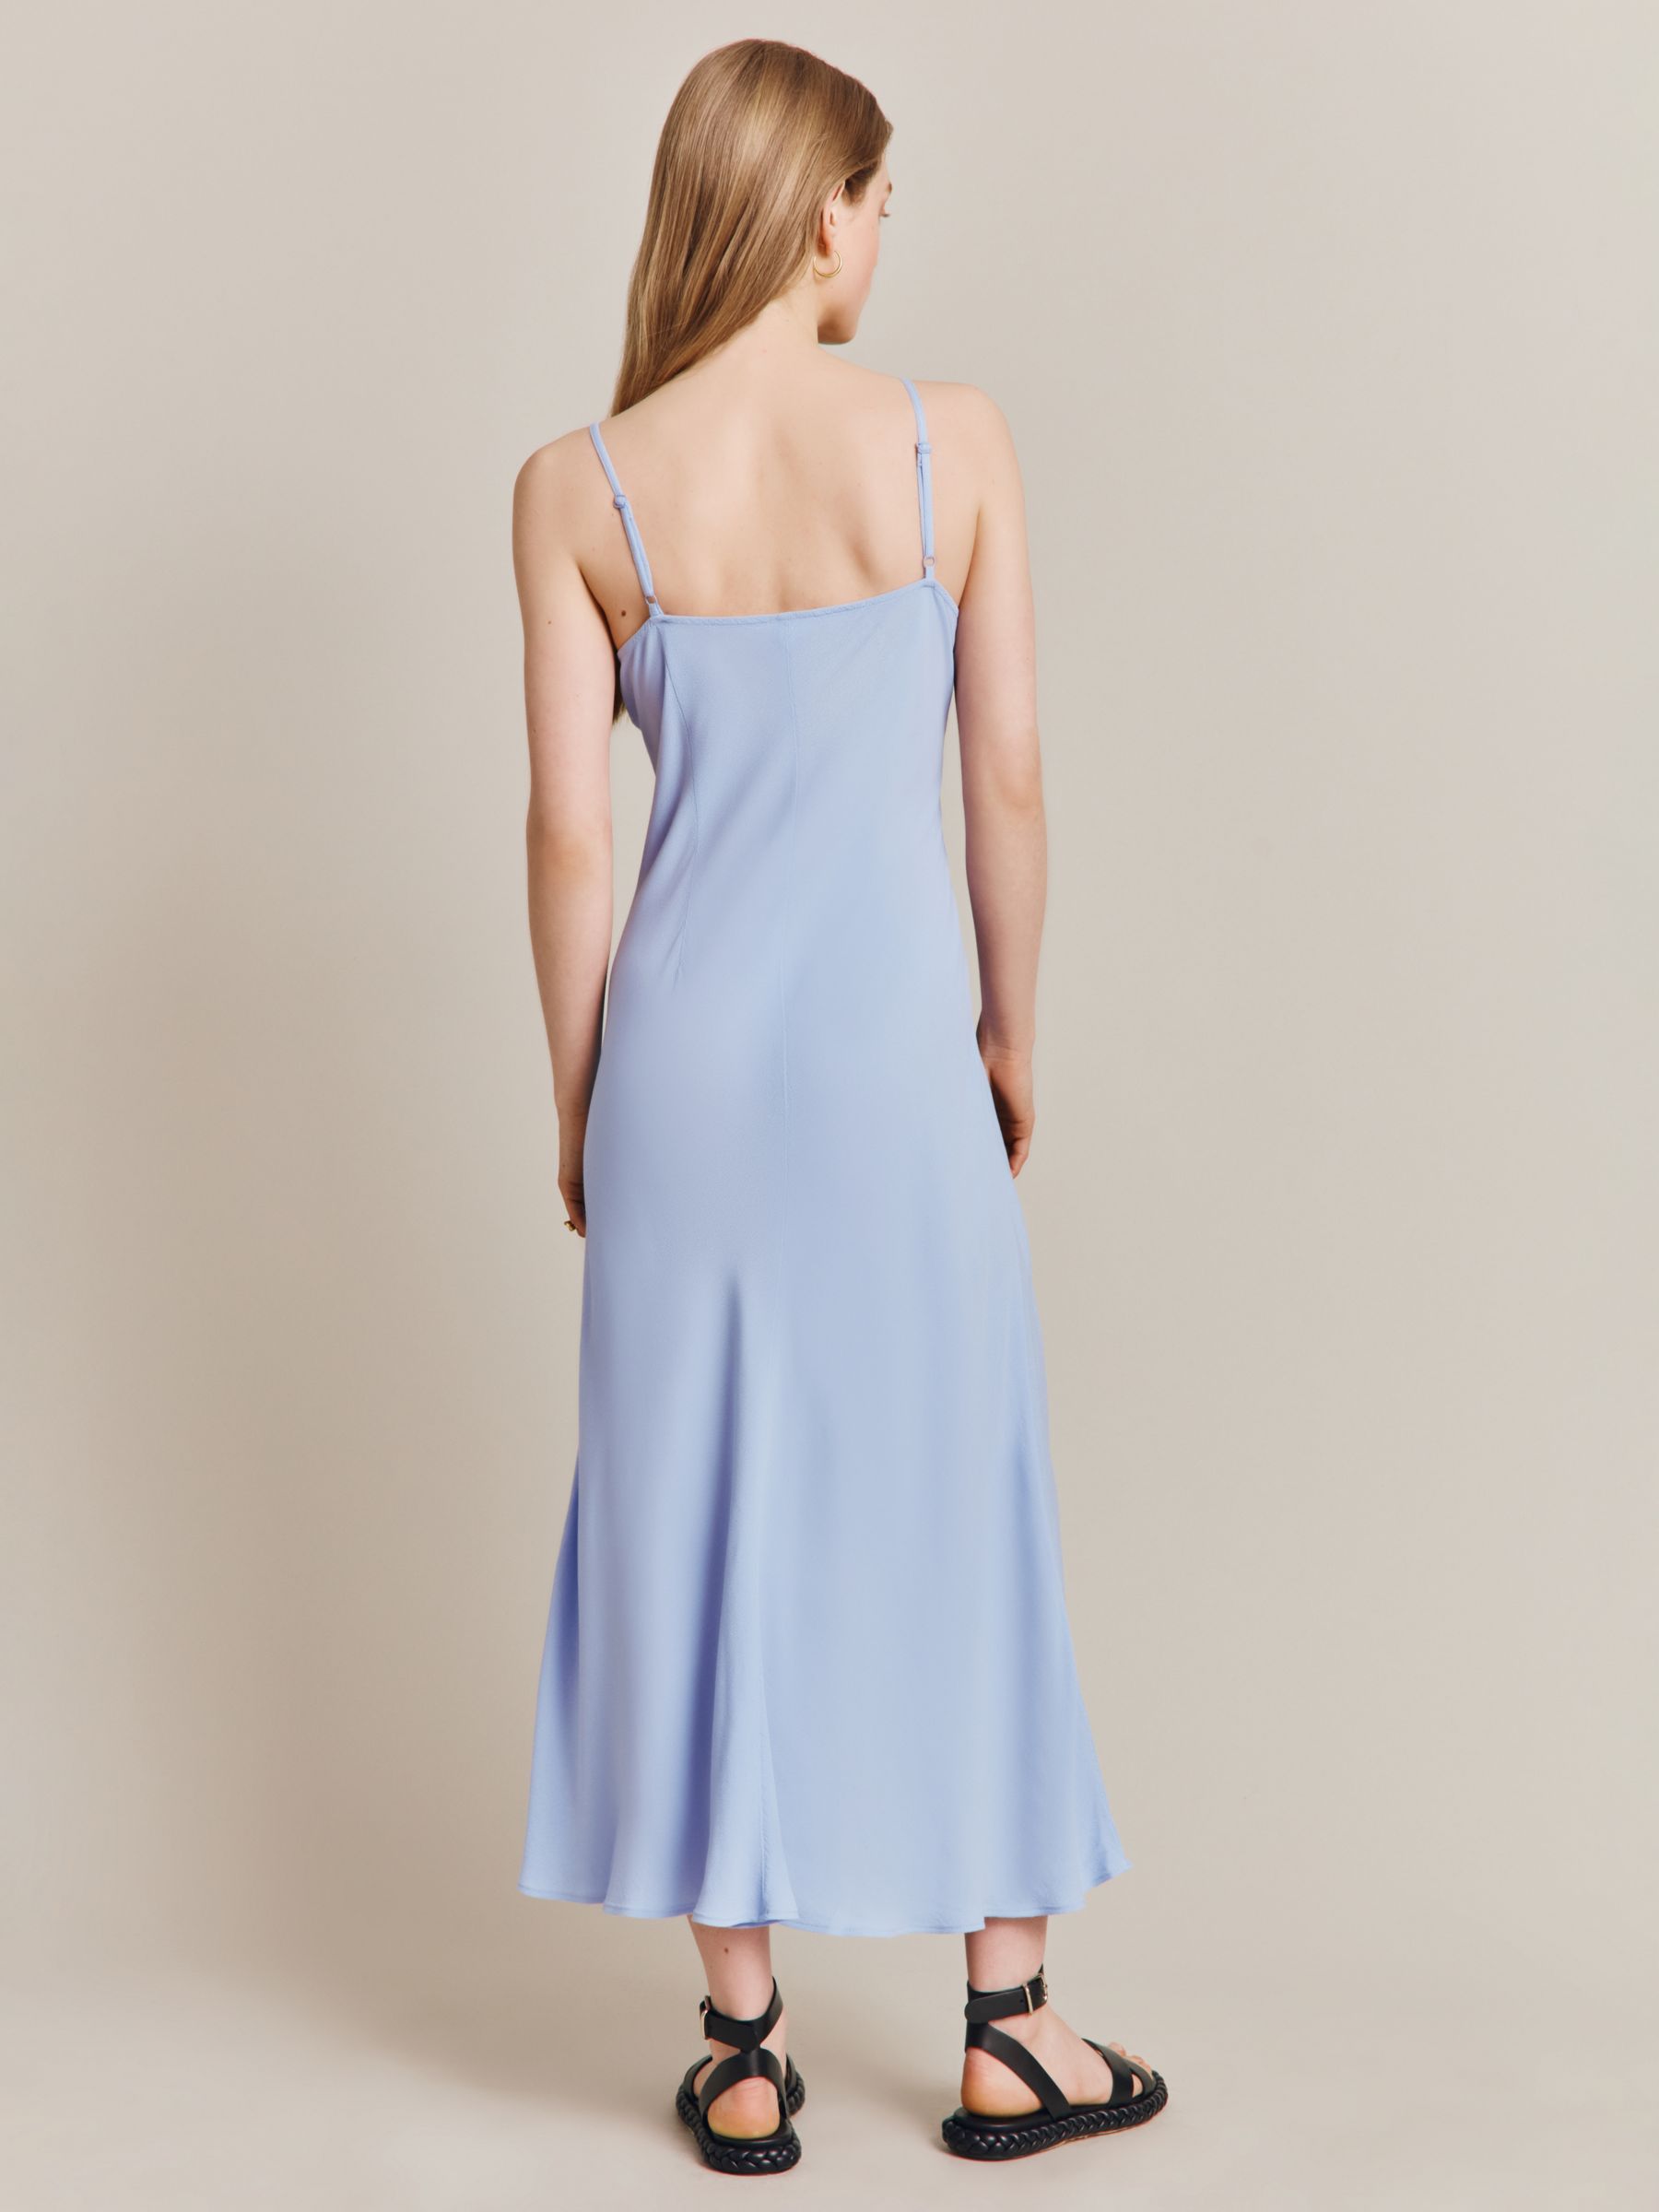 Ghost Sofia Crepe Slip Dress, Periwinkle at John Lewis & Partners